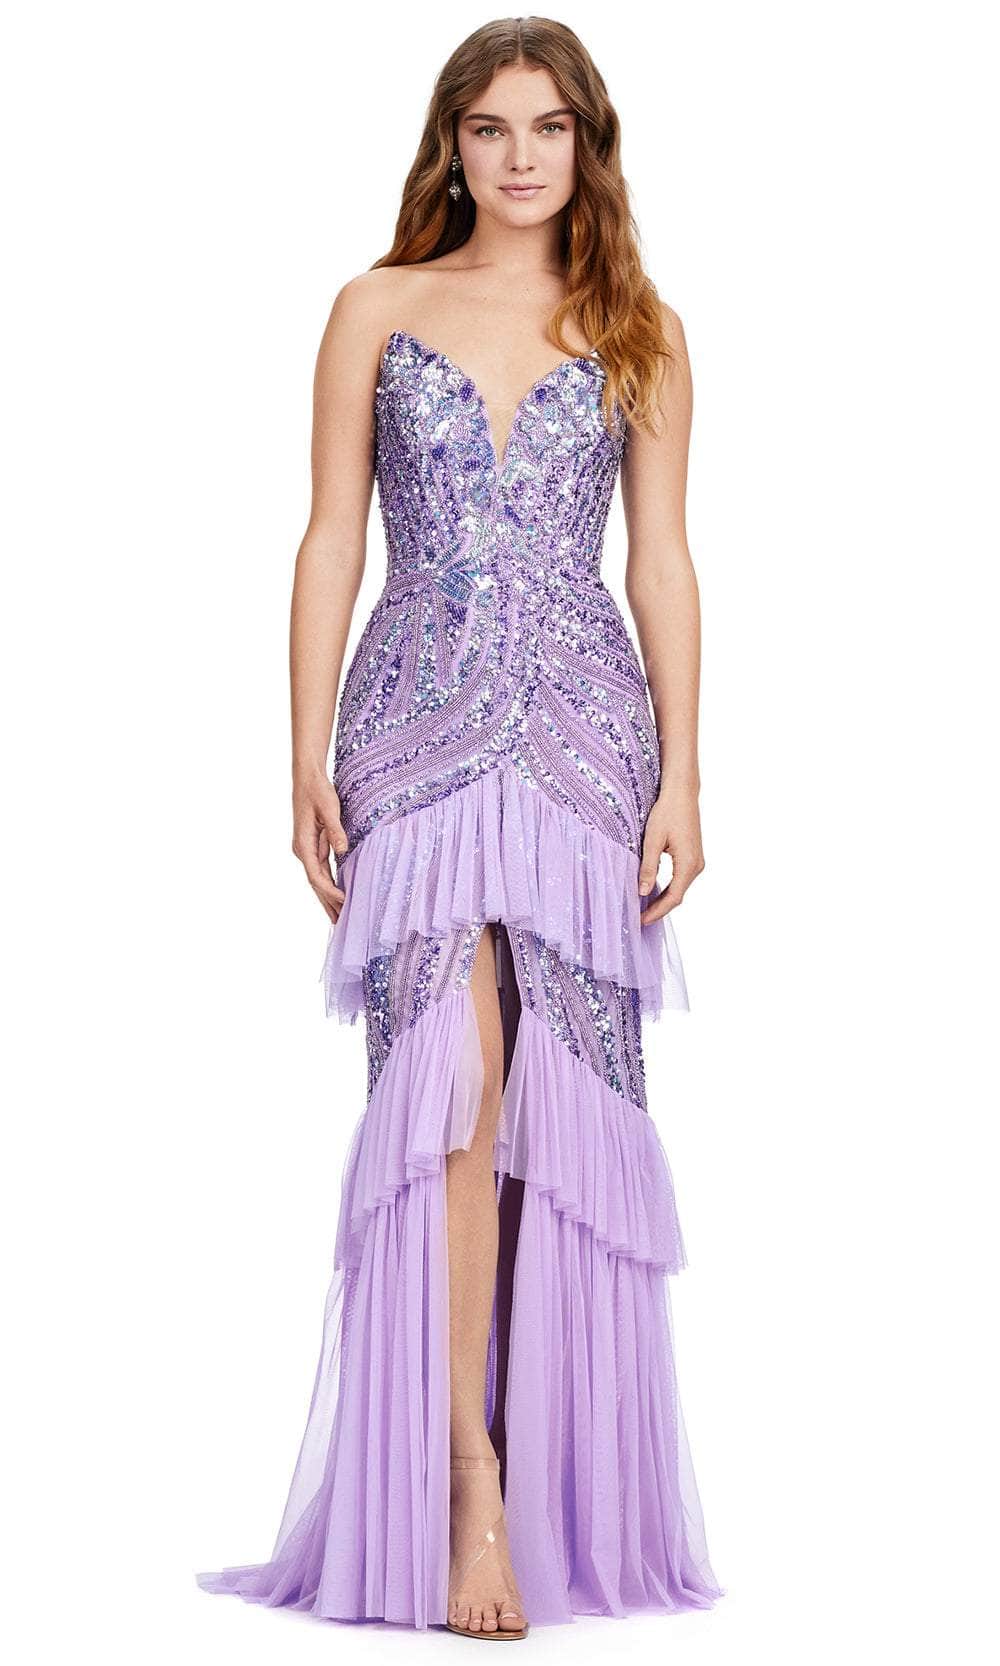 Ashley Lauren 11438 - Ruffle Tiered Prom Dress 00 /  Lilac